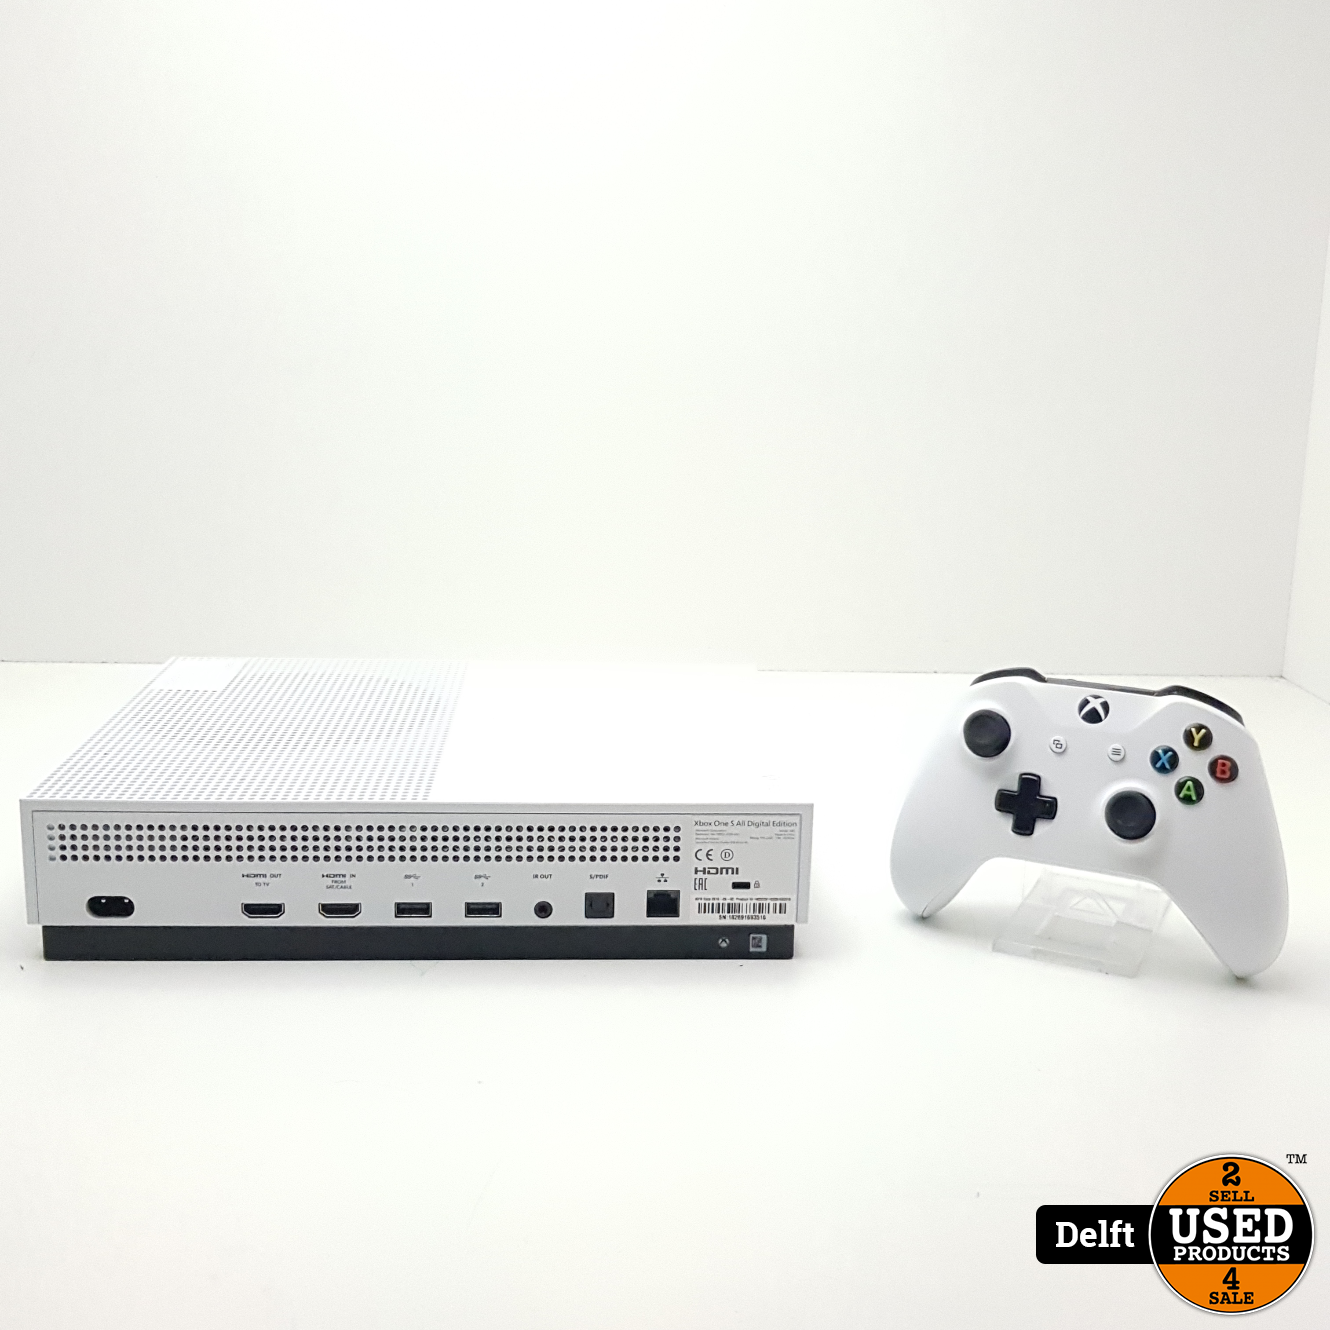 punt Oppositie Horzel Xbox One S all Digital incl controller en kabels garantie - Used Products  Delft